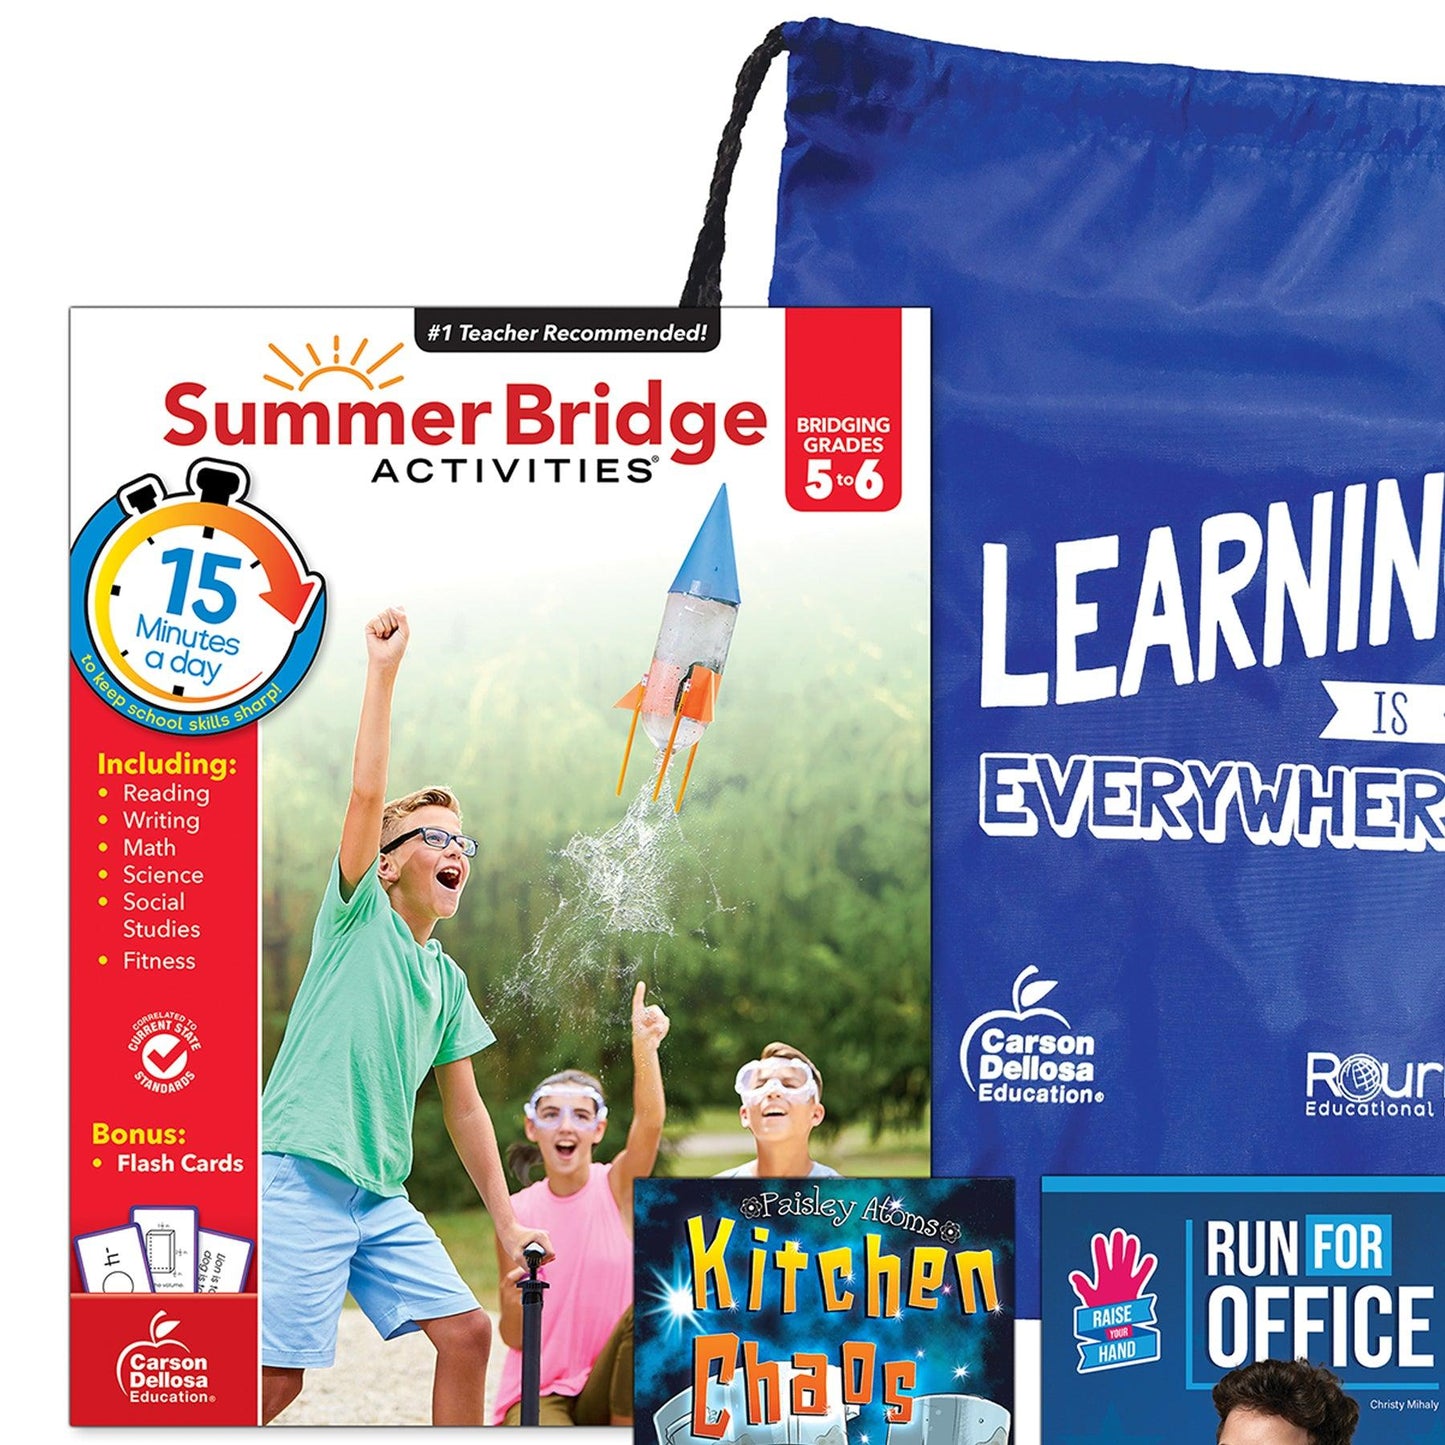 Summer Bridge Essentials Backpack, Grade 5-6 - Loomini